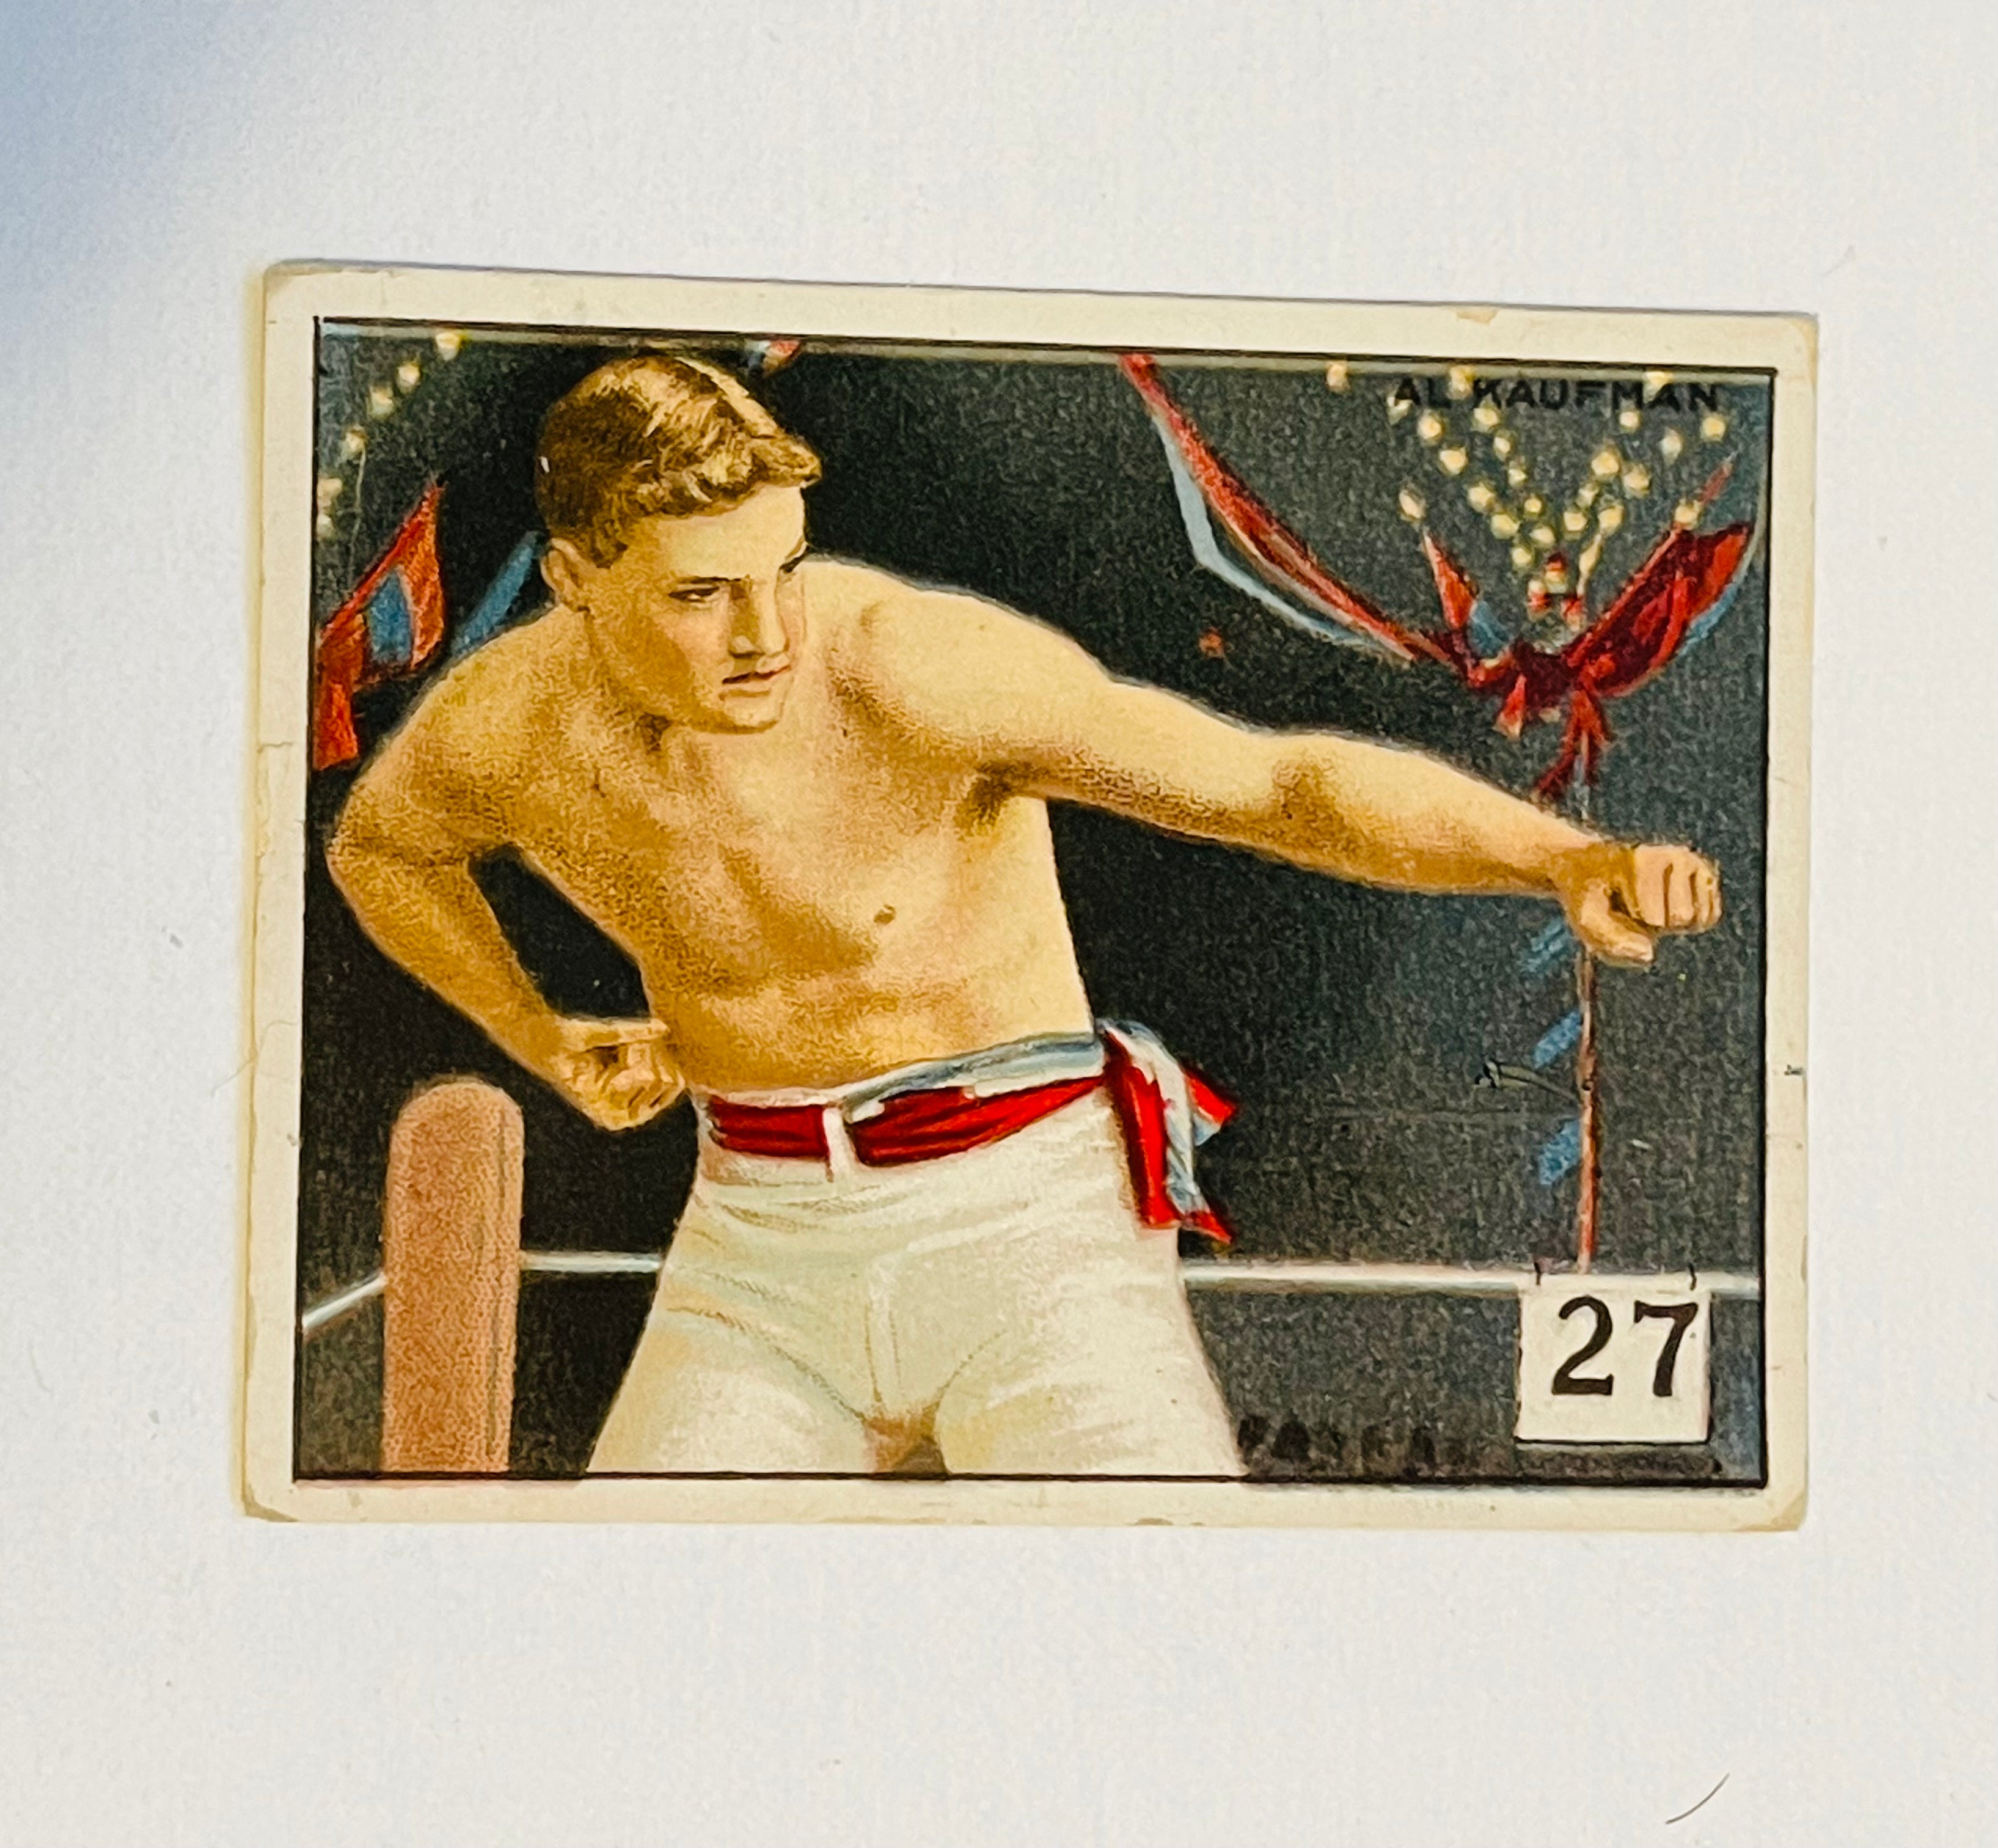 Boxing Al Kaufman rare Honest longcut cigarette boxing card